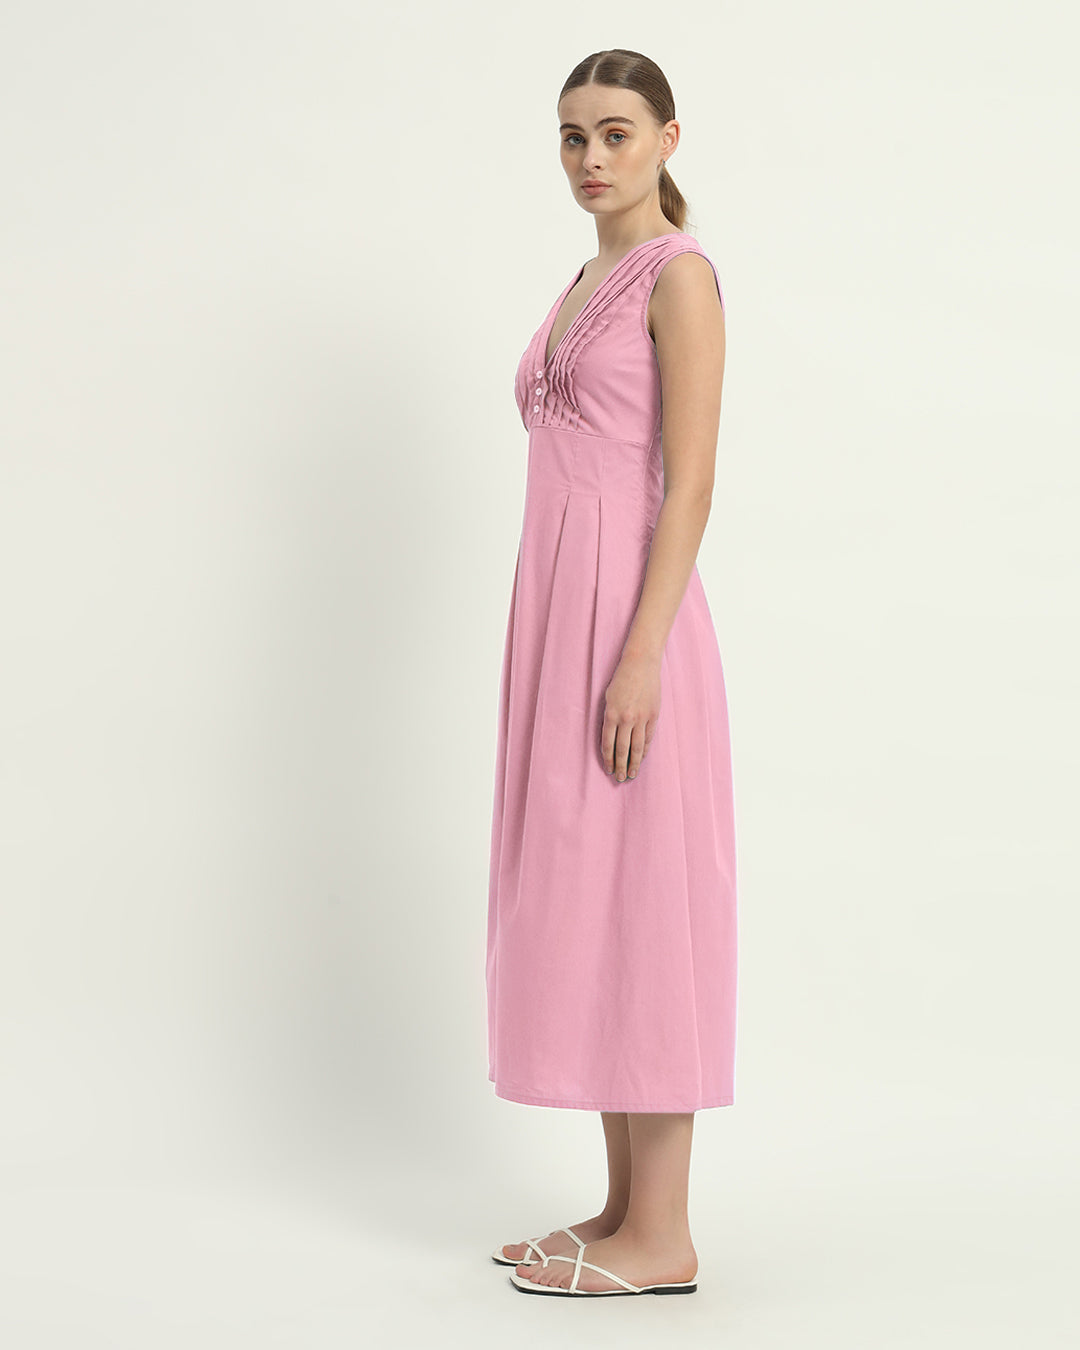 The Mendoza Fondant Pink Cotton Dress